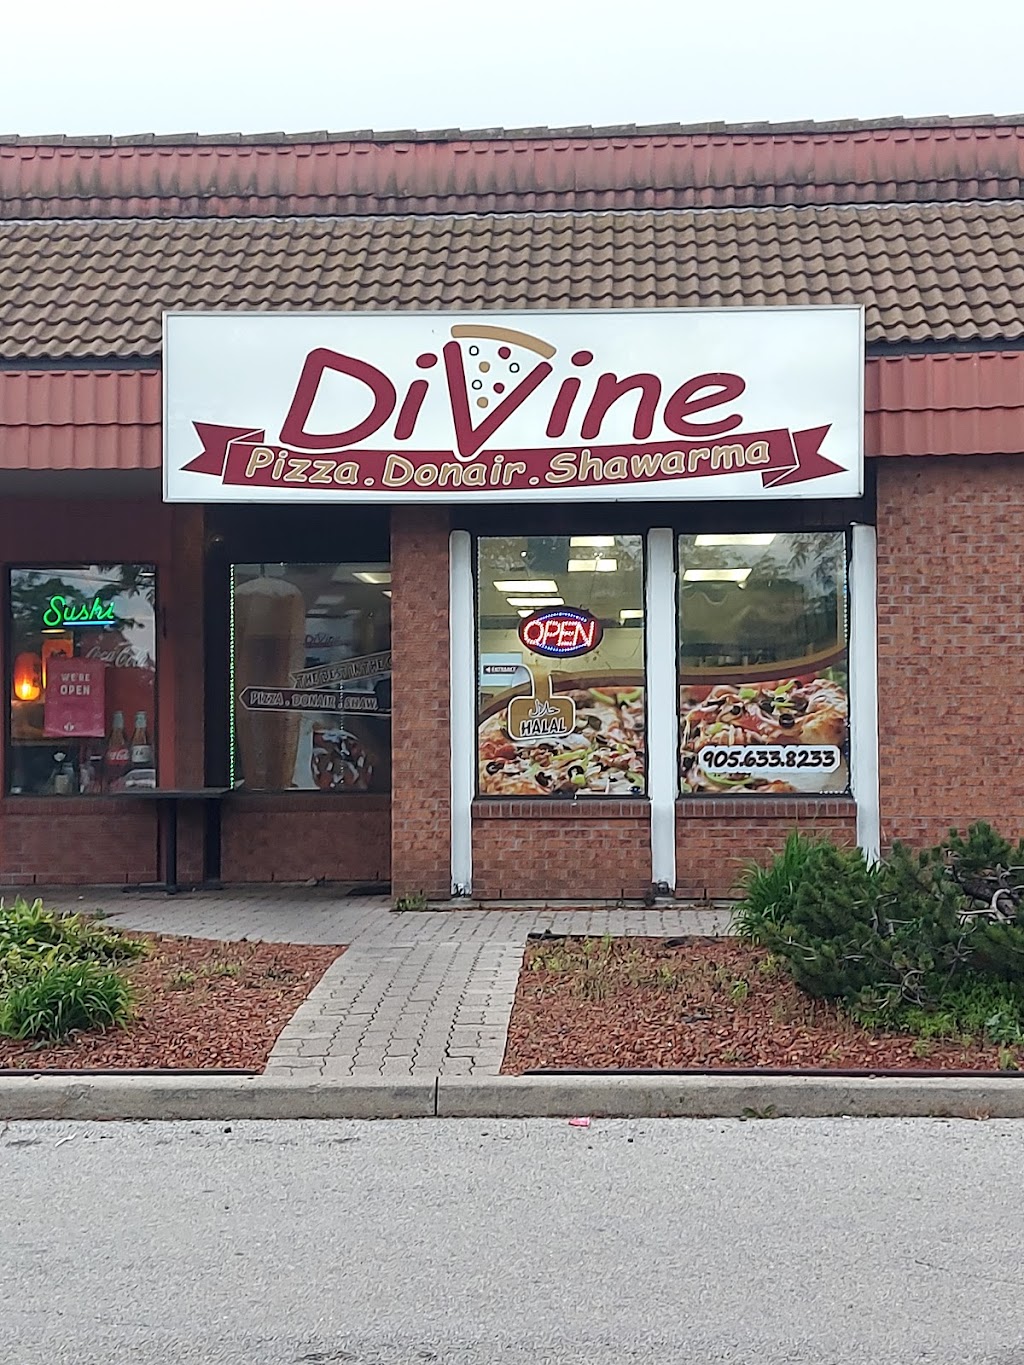 Divine Pizza Donair Shawarma | 2405 Fairview St, Burlington, ON L7R 2E3, Canada | Phone: (905) 633-8233